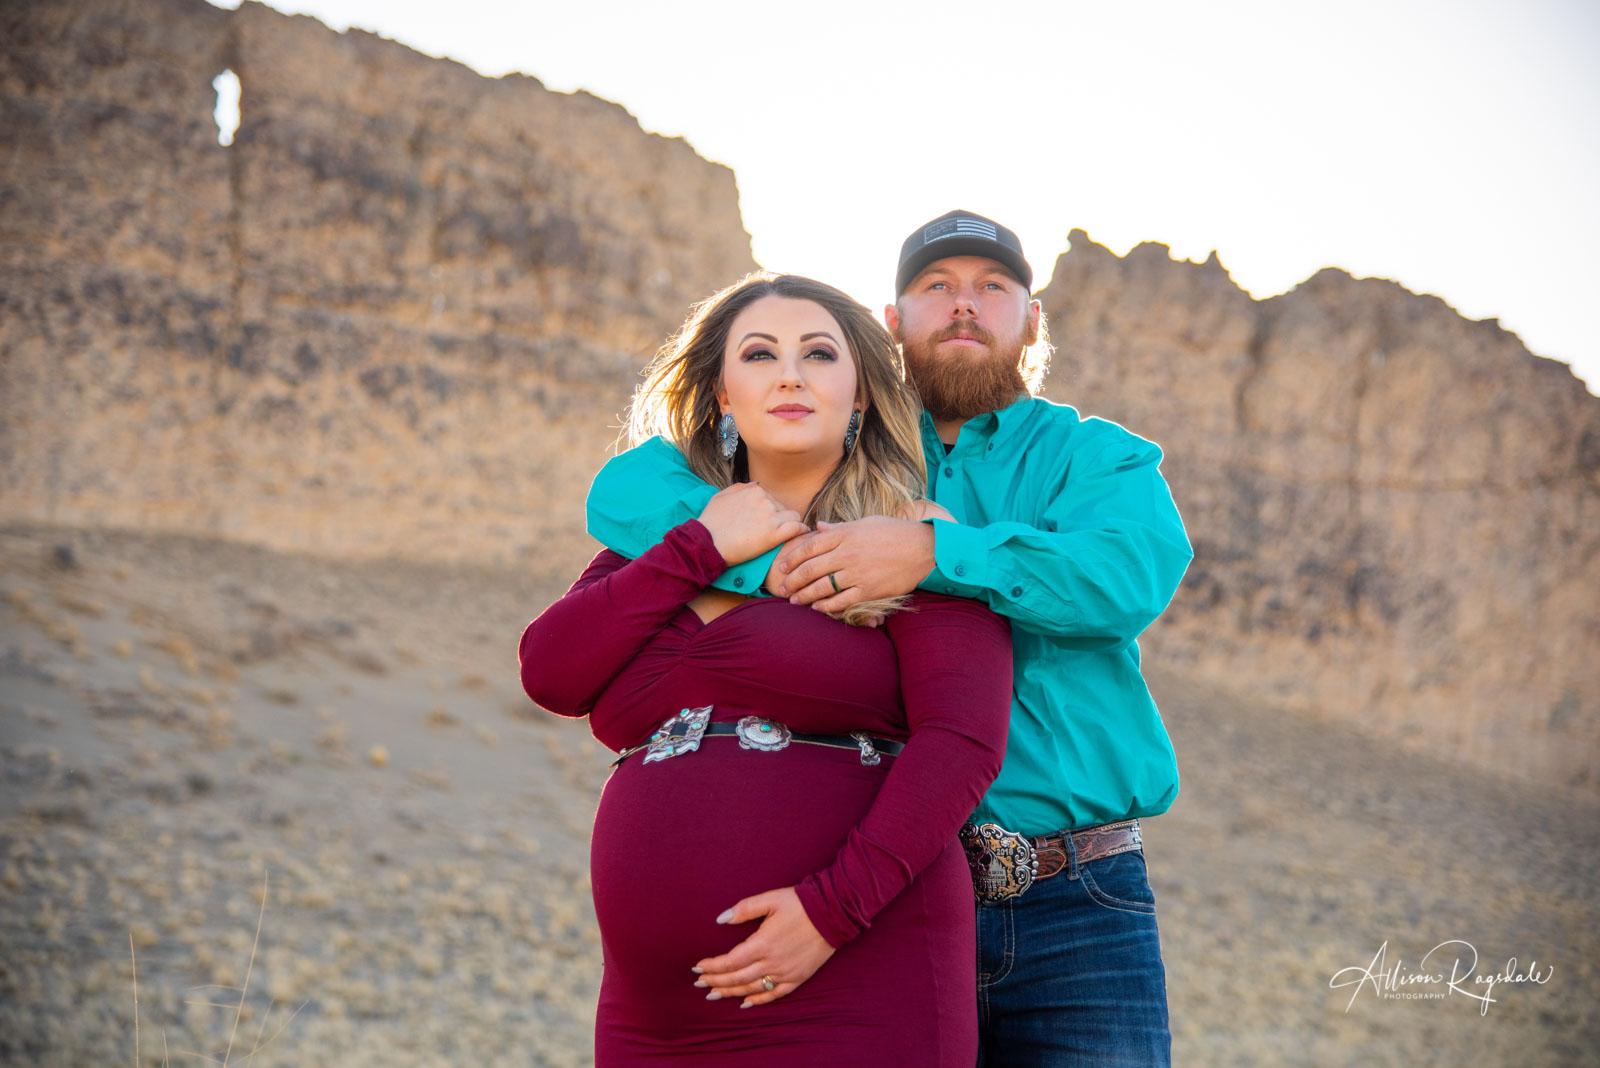 Desert Maternity Portraits